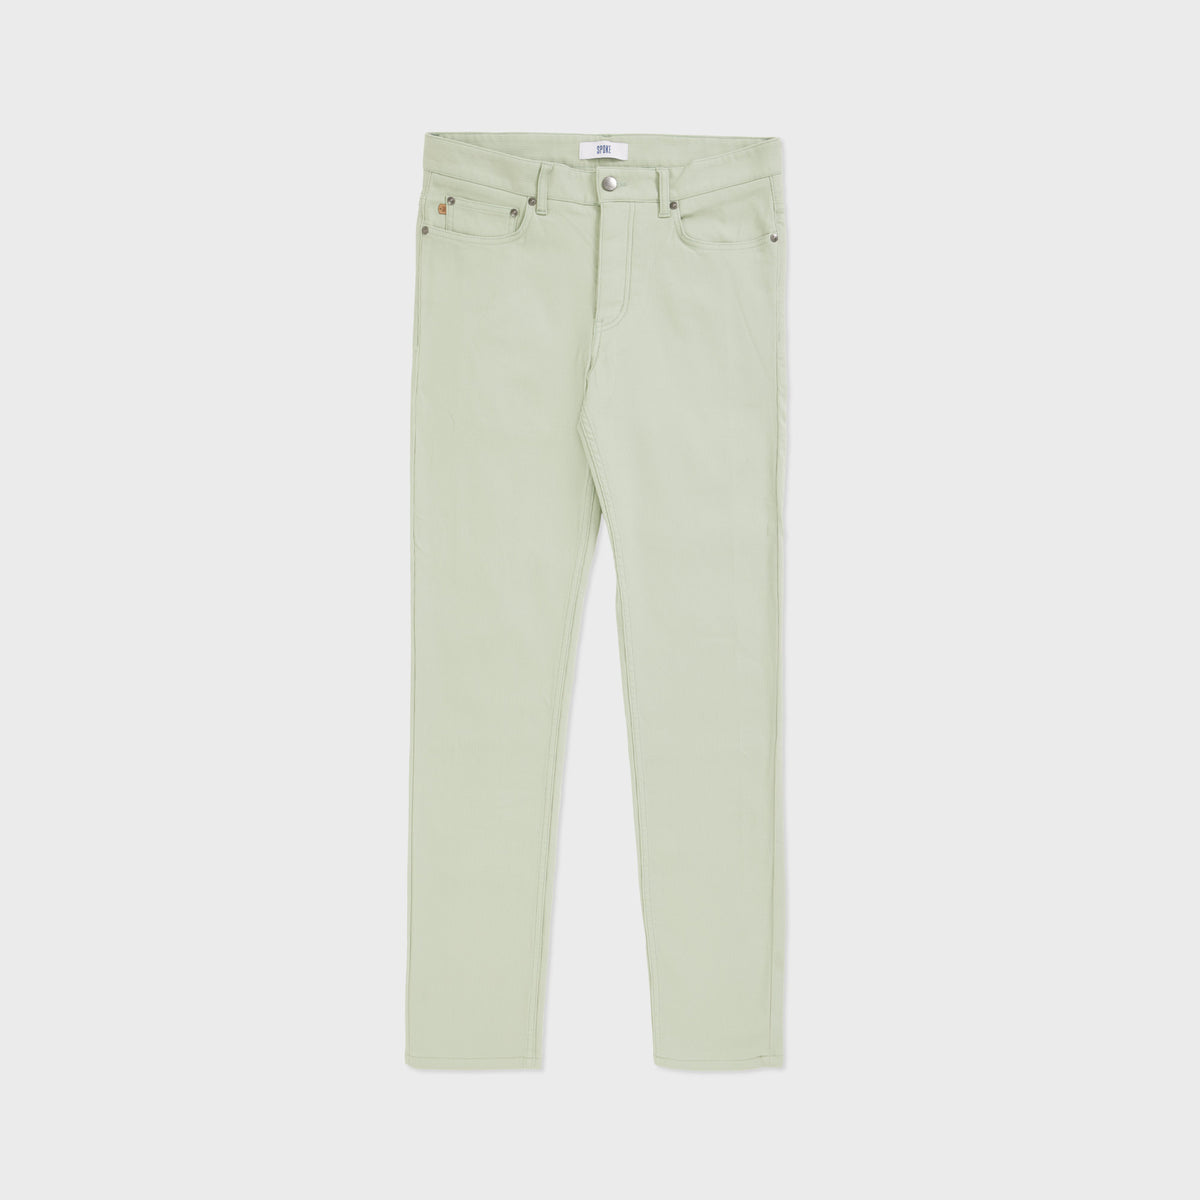 Aqua Grey Fives - Everyday Men's Custom Fit Chino Pants - SPOKE - SPOKE